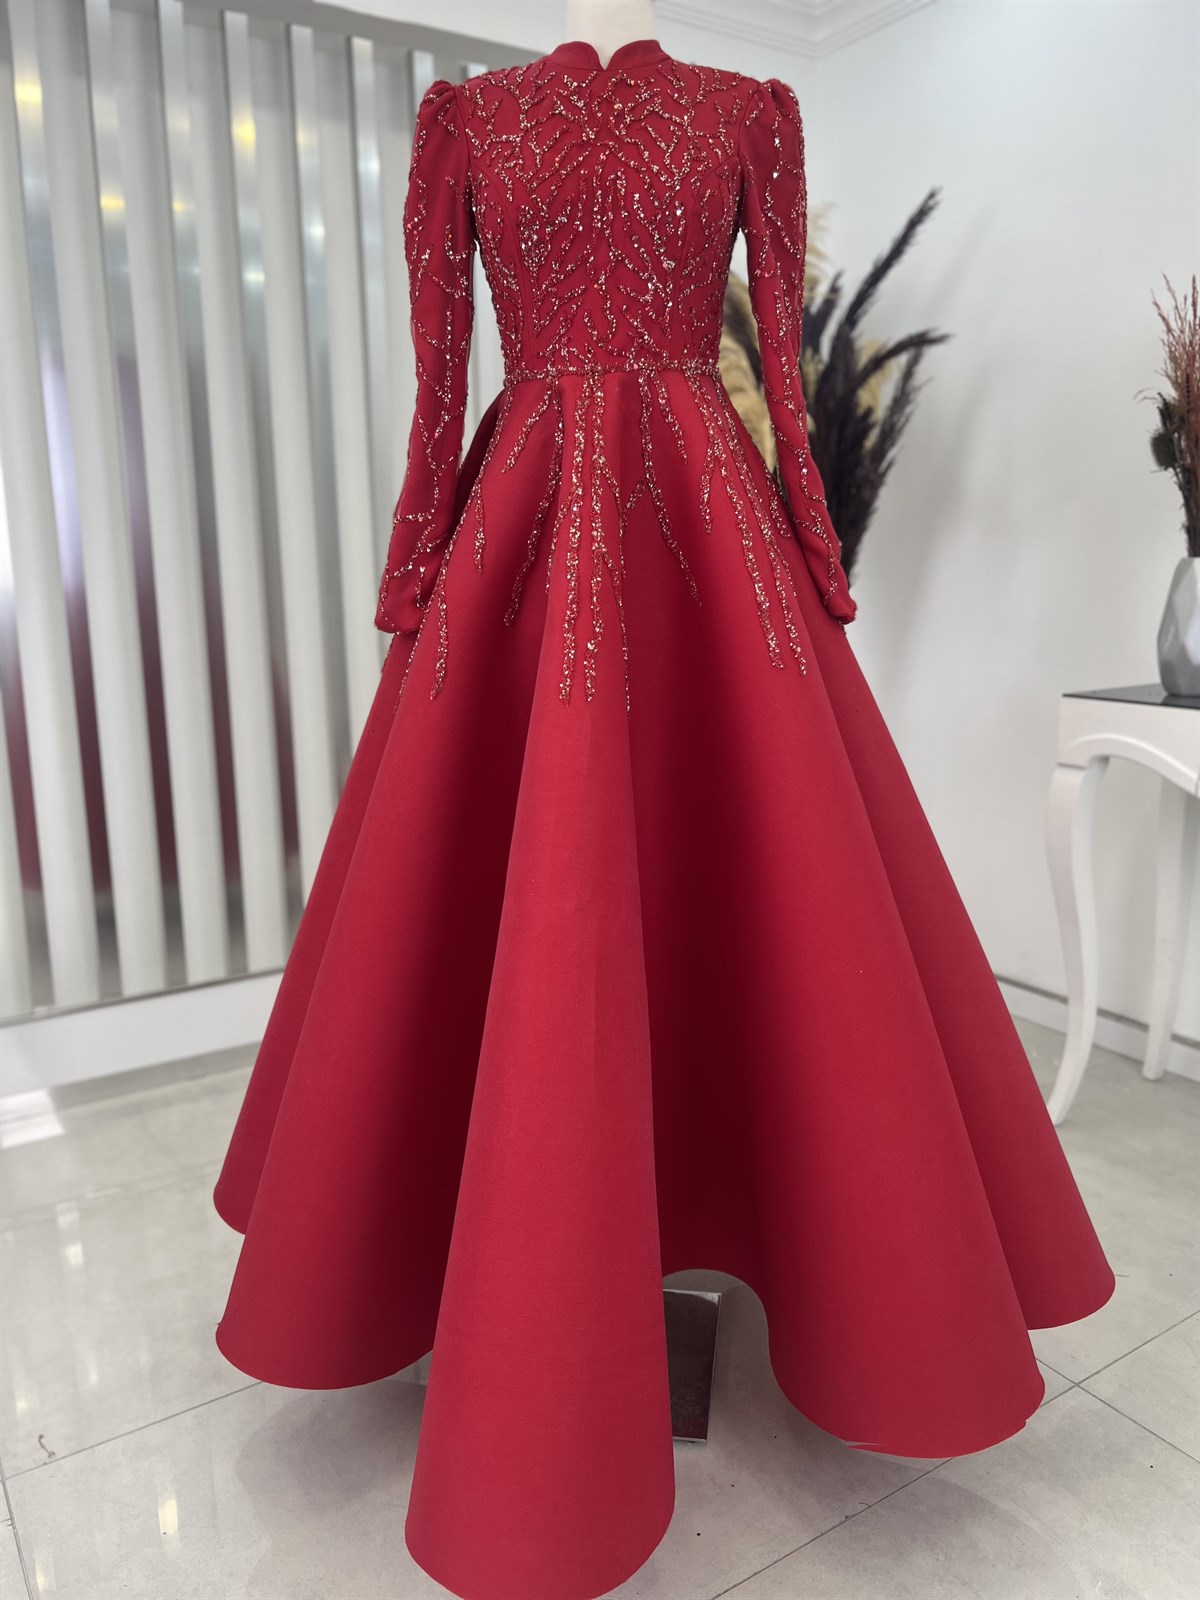 Imagination Sconce Detailed Princess Form Hijab Evening Dresses Red